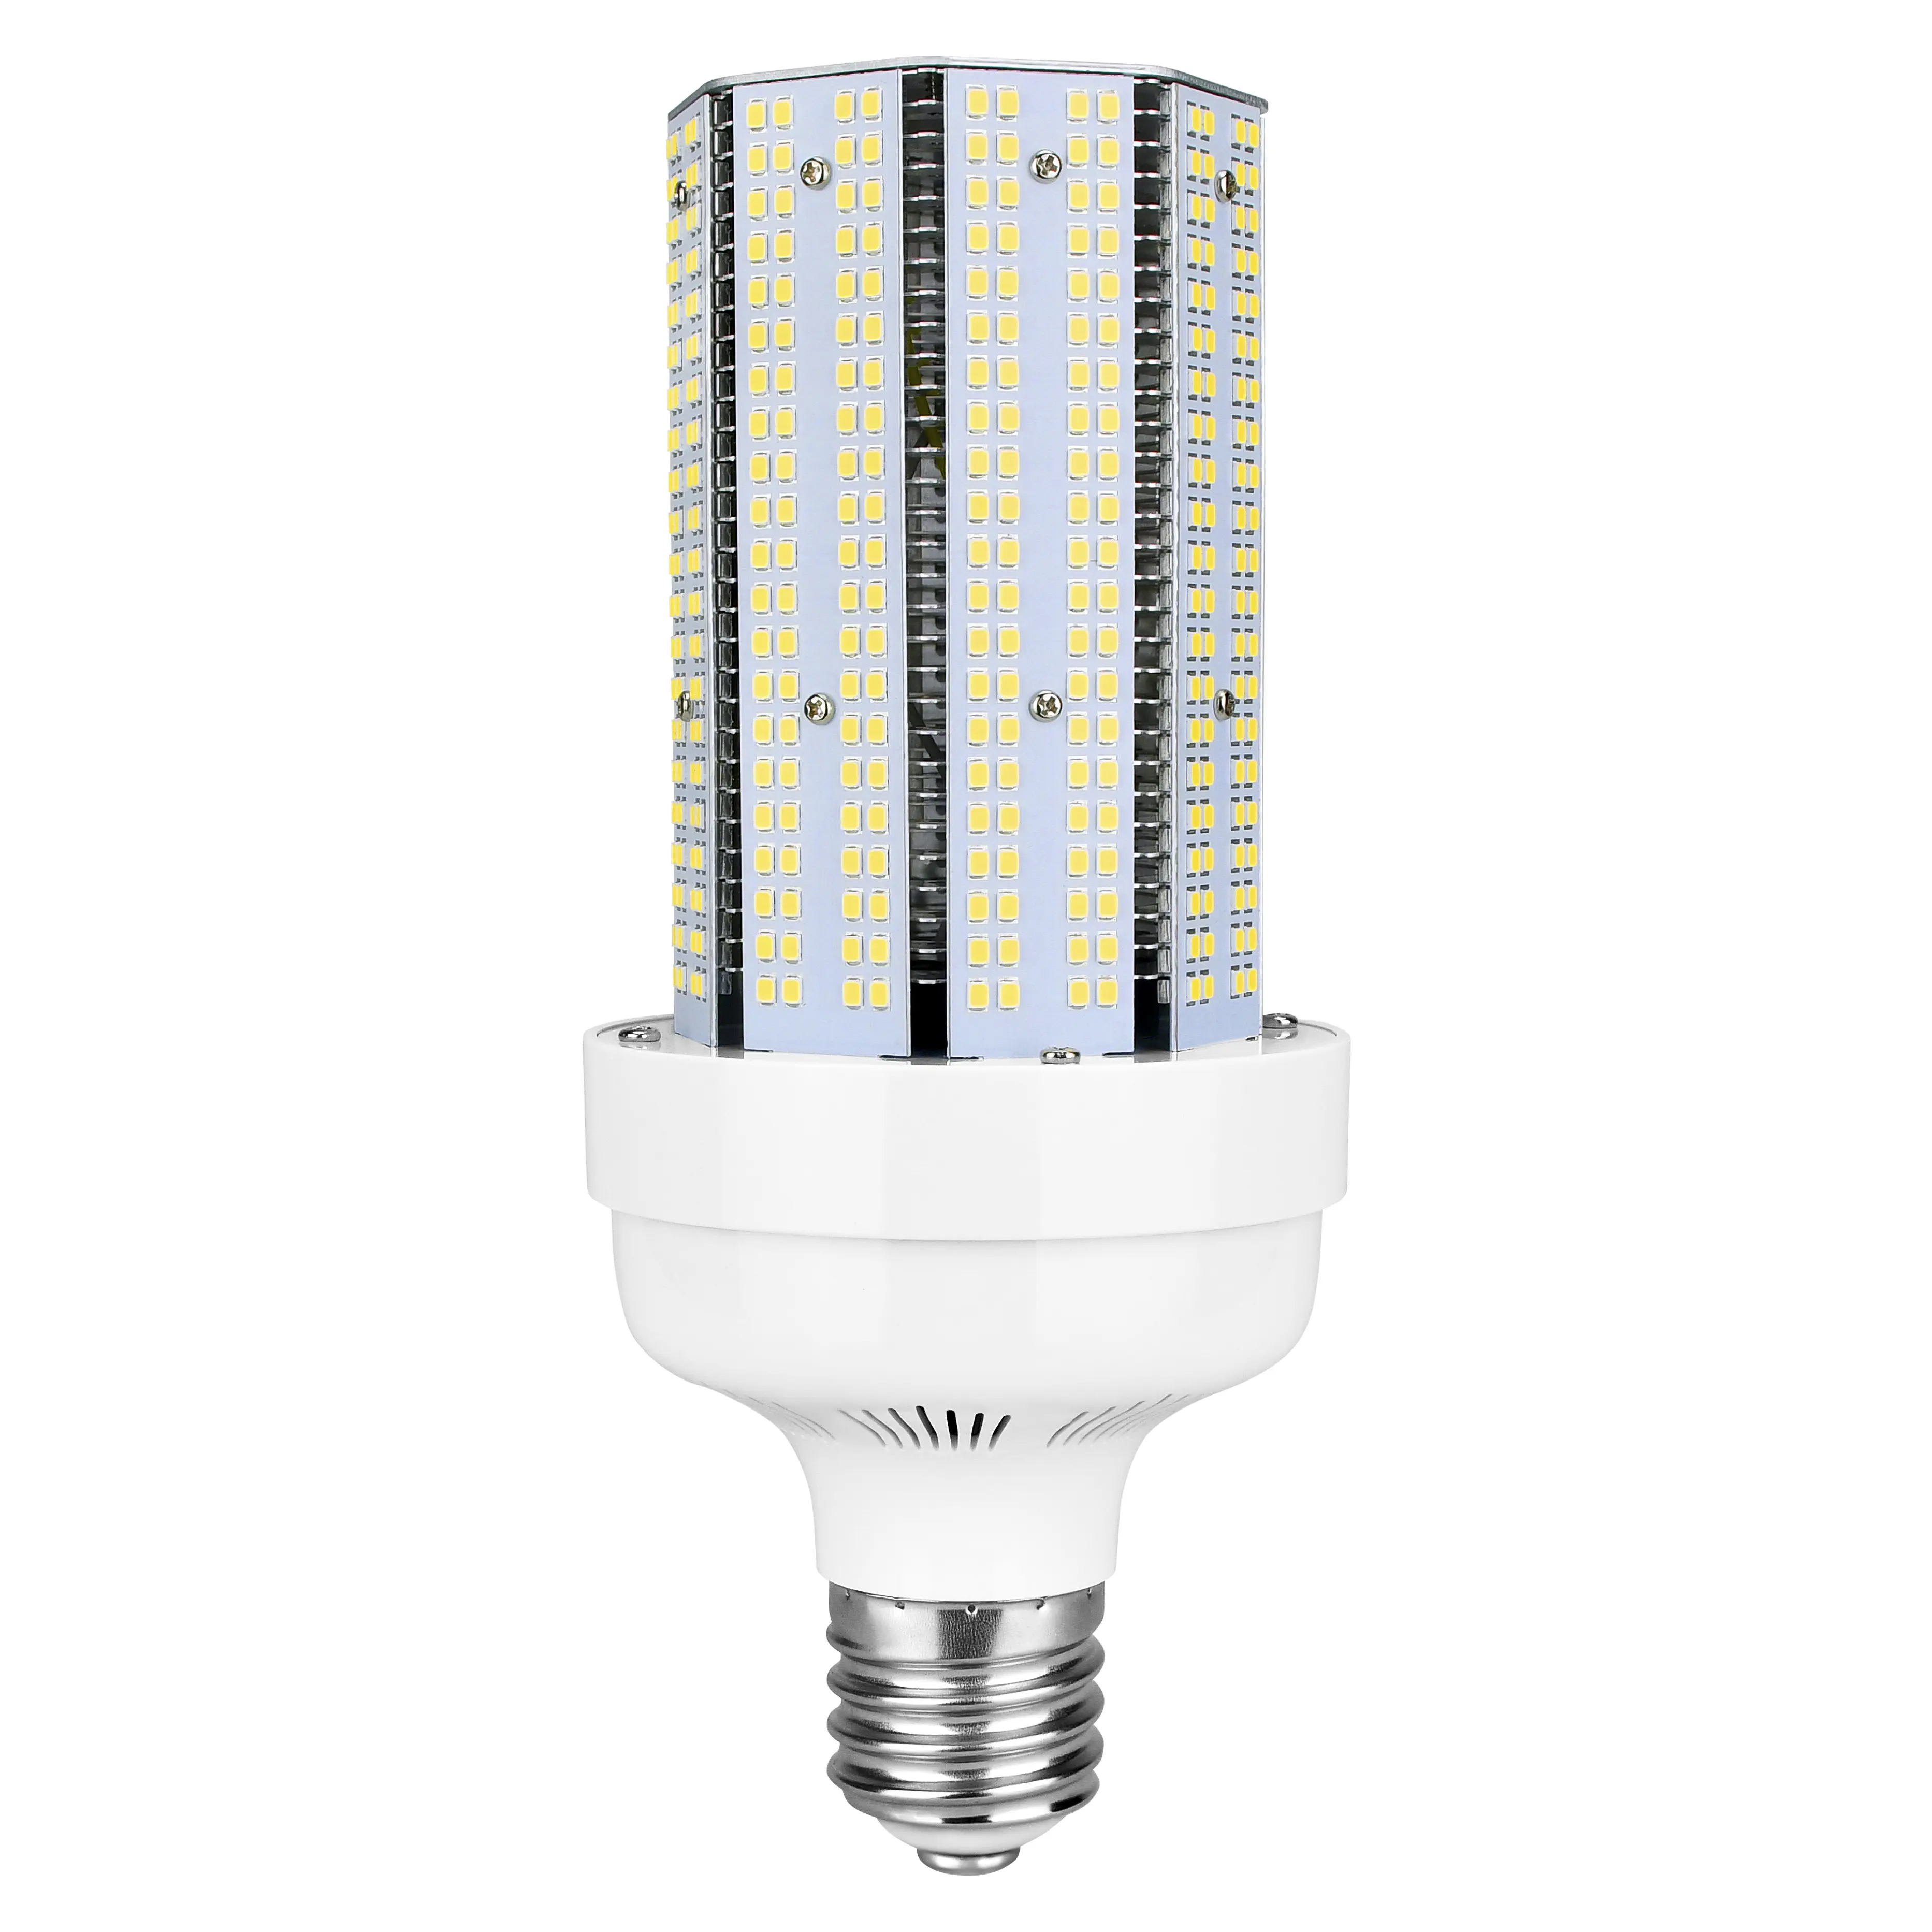 youlumi high quality Dimmed 40W 50W 65W 85W 105W e27 led corn light bulb